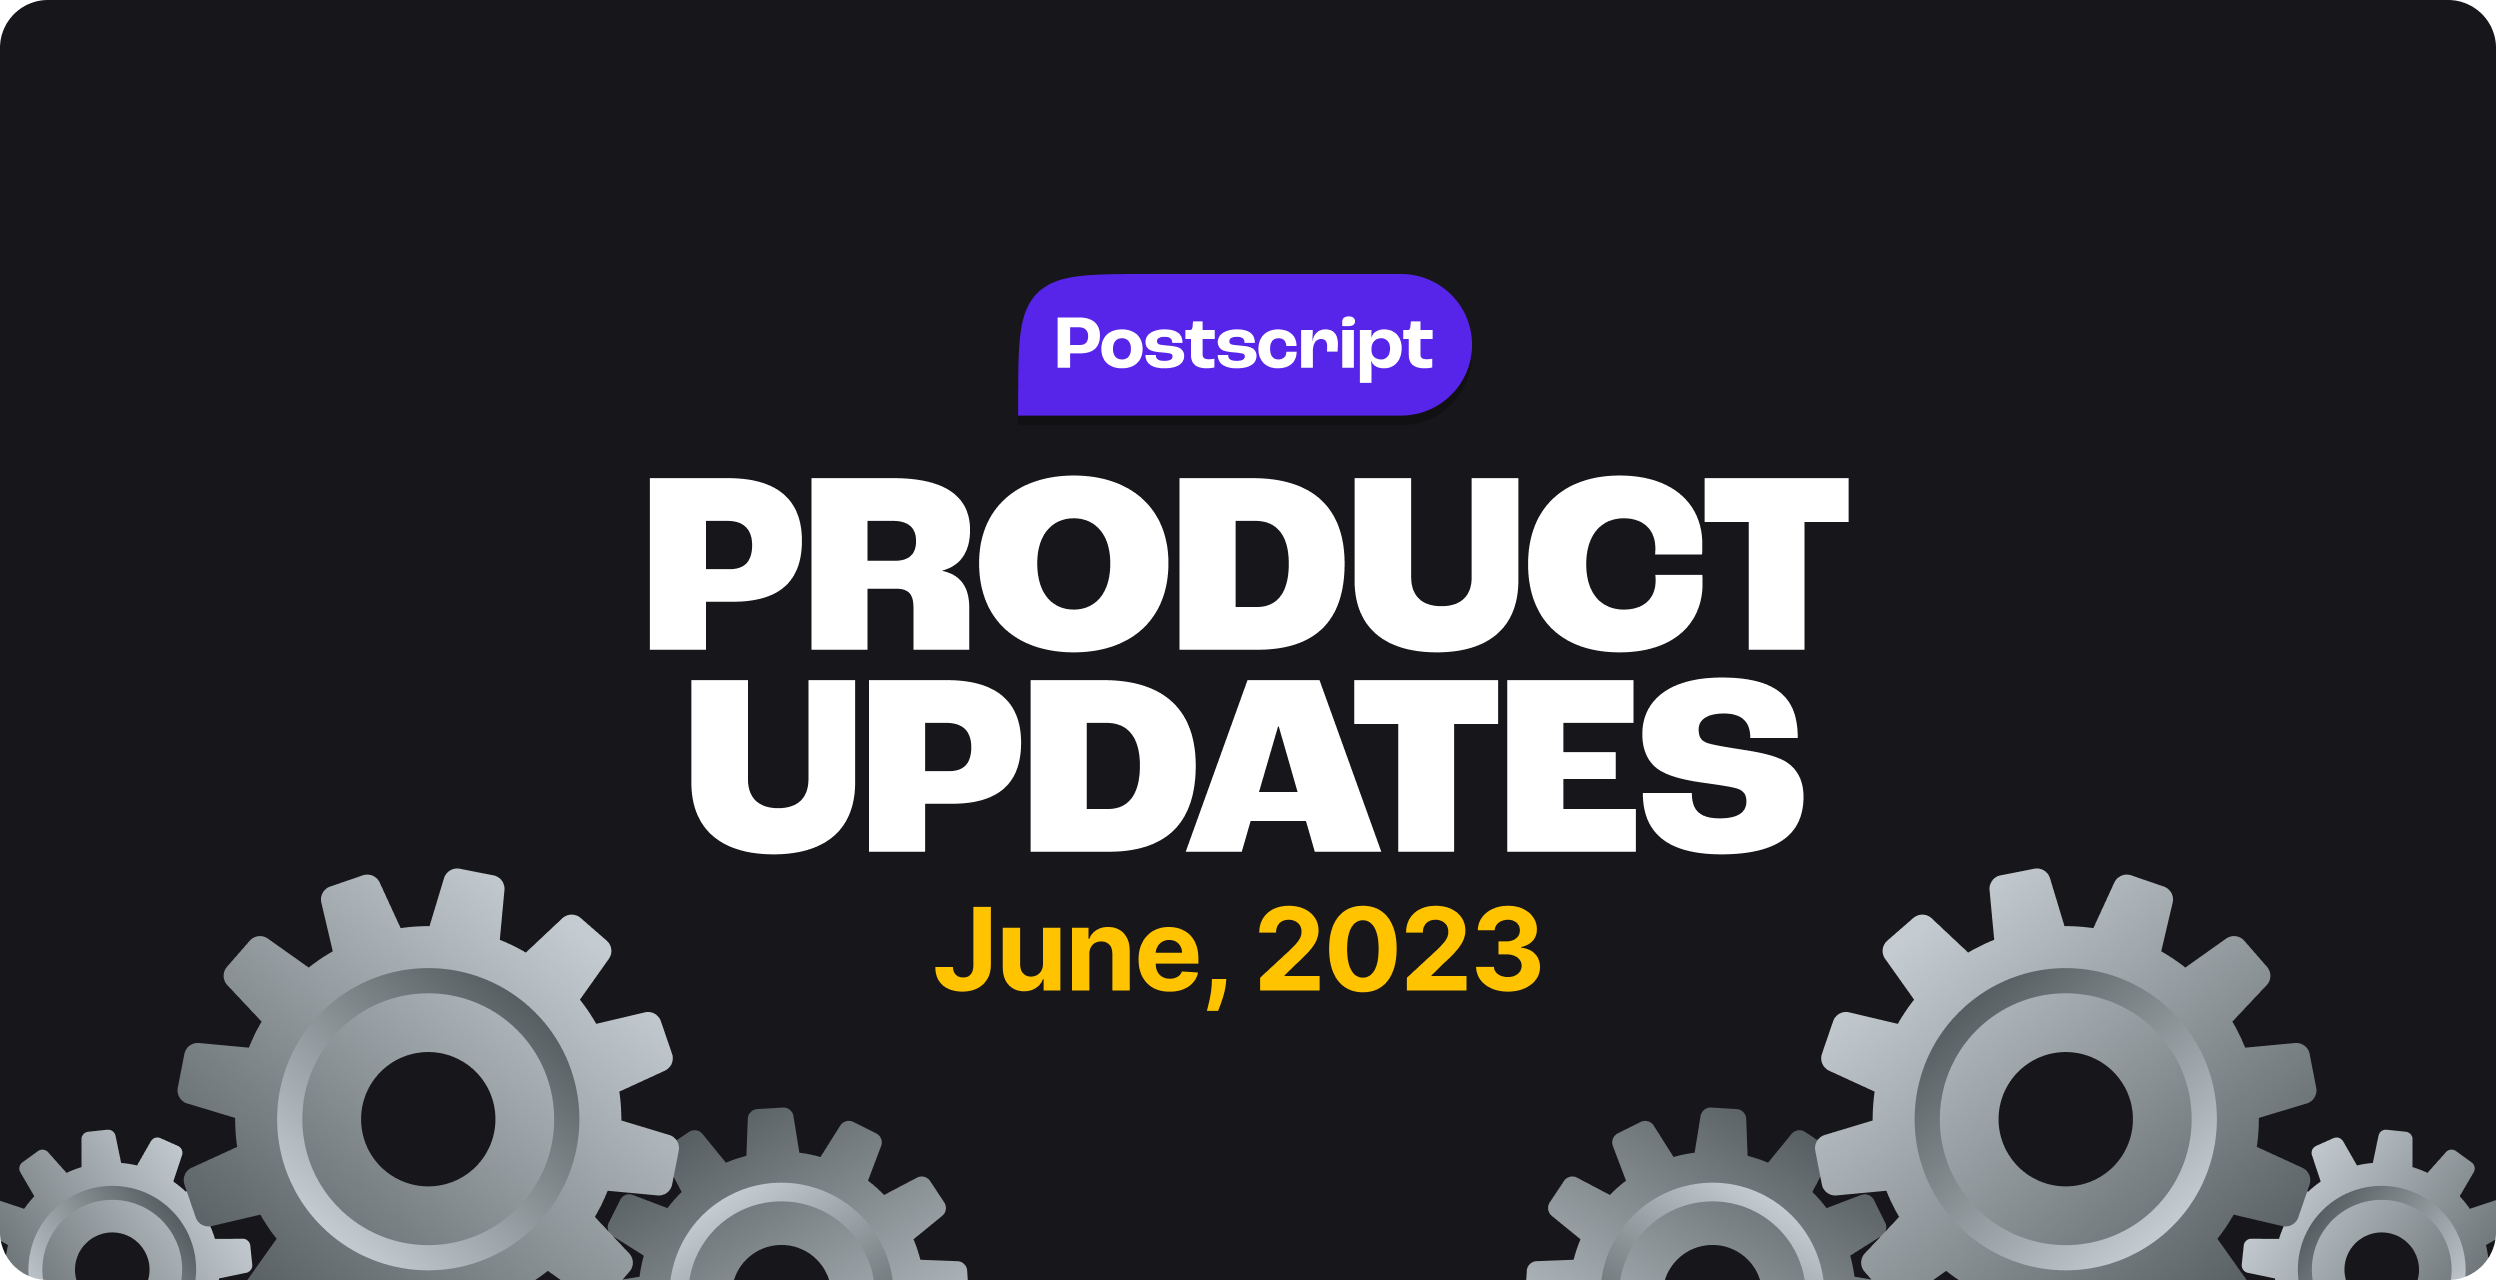 What’s New in Postscript: June 2023 Product Updates